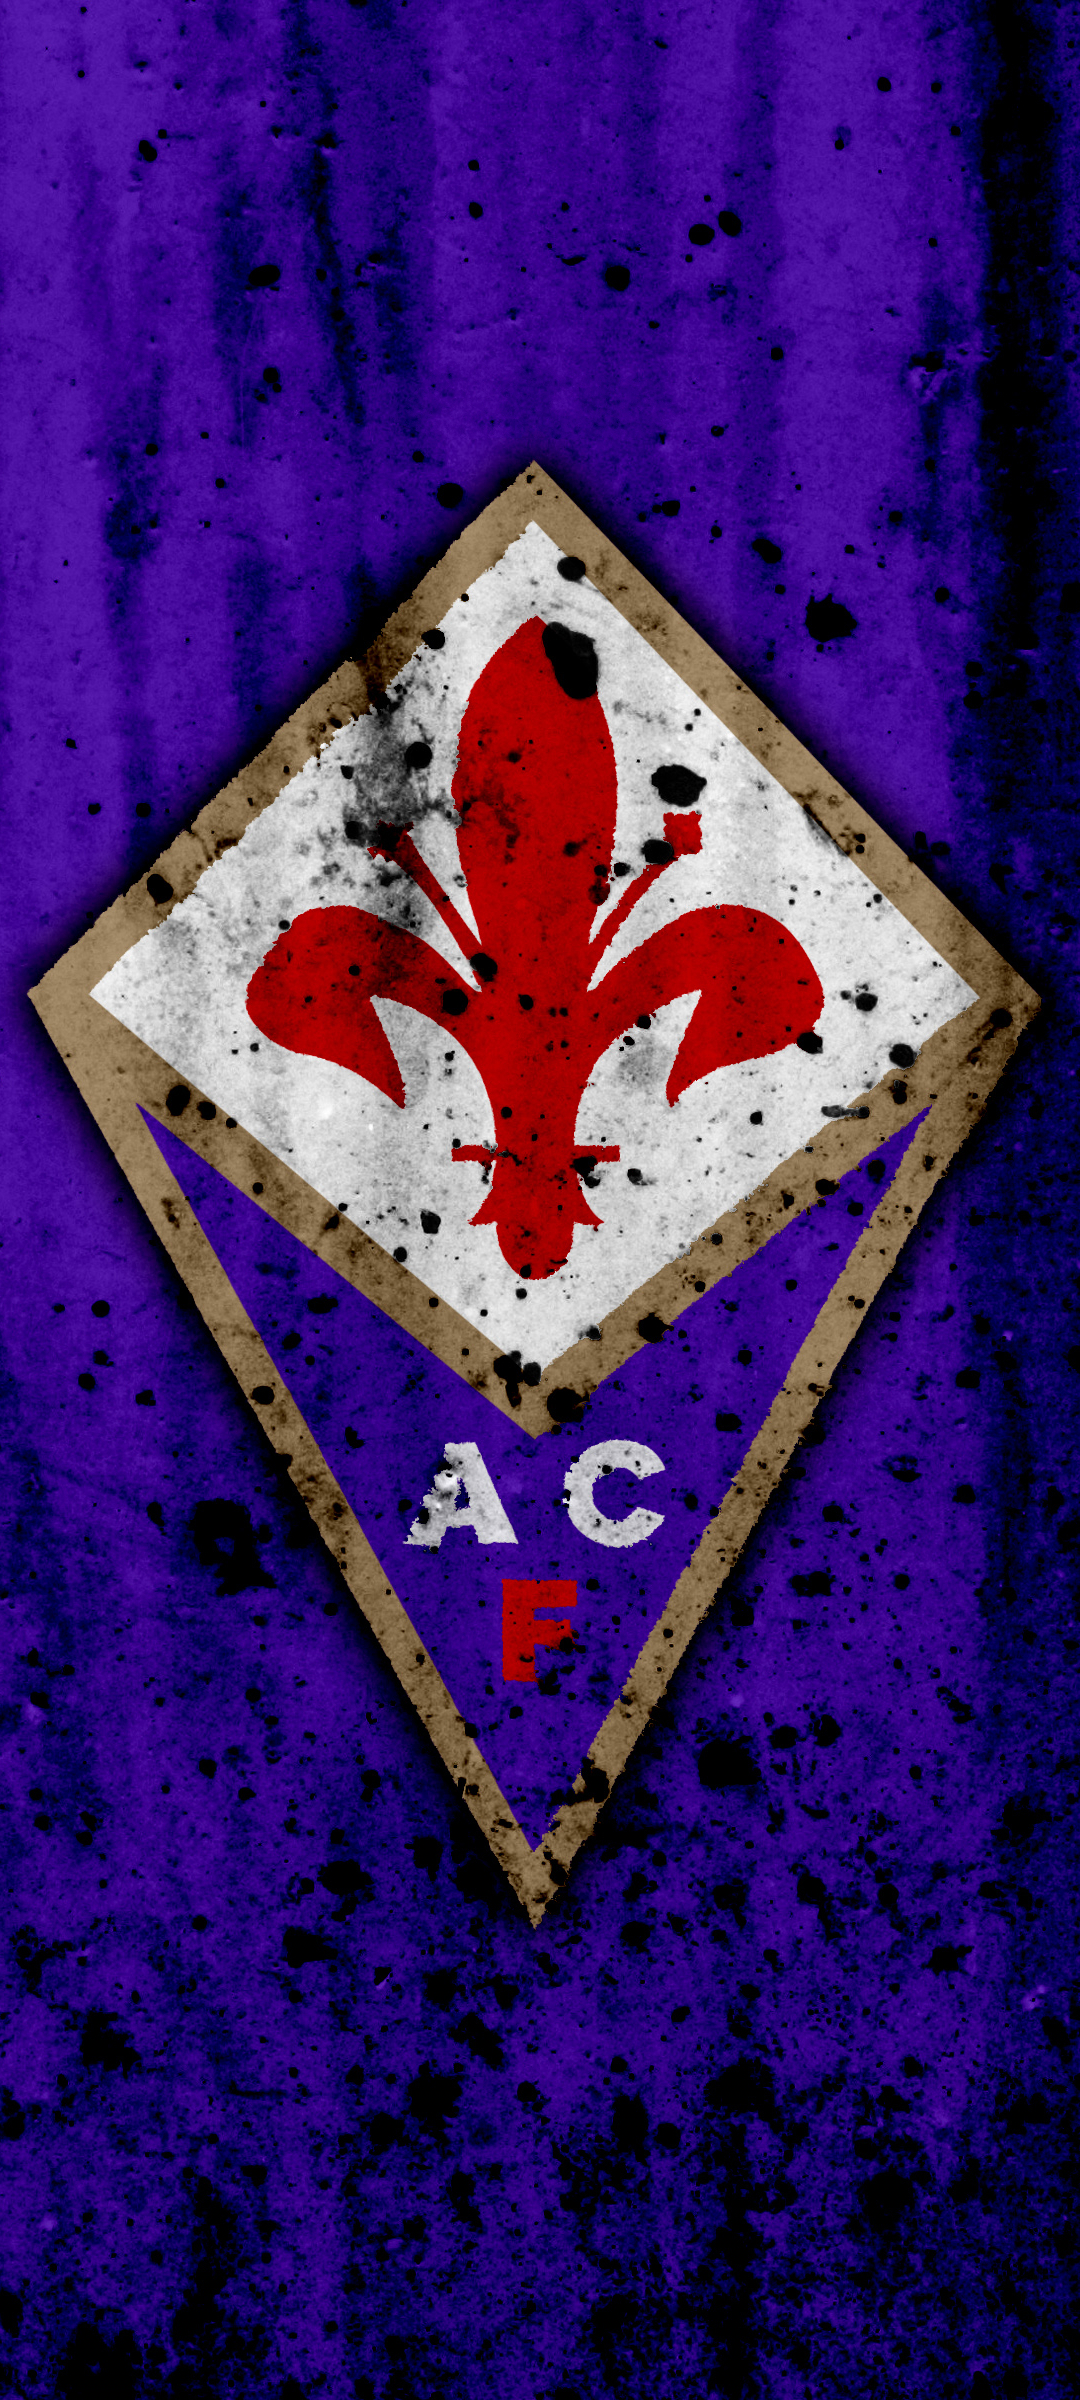 ACF Fiorentina Phone Wallpaper